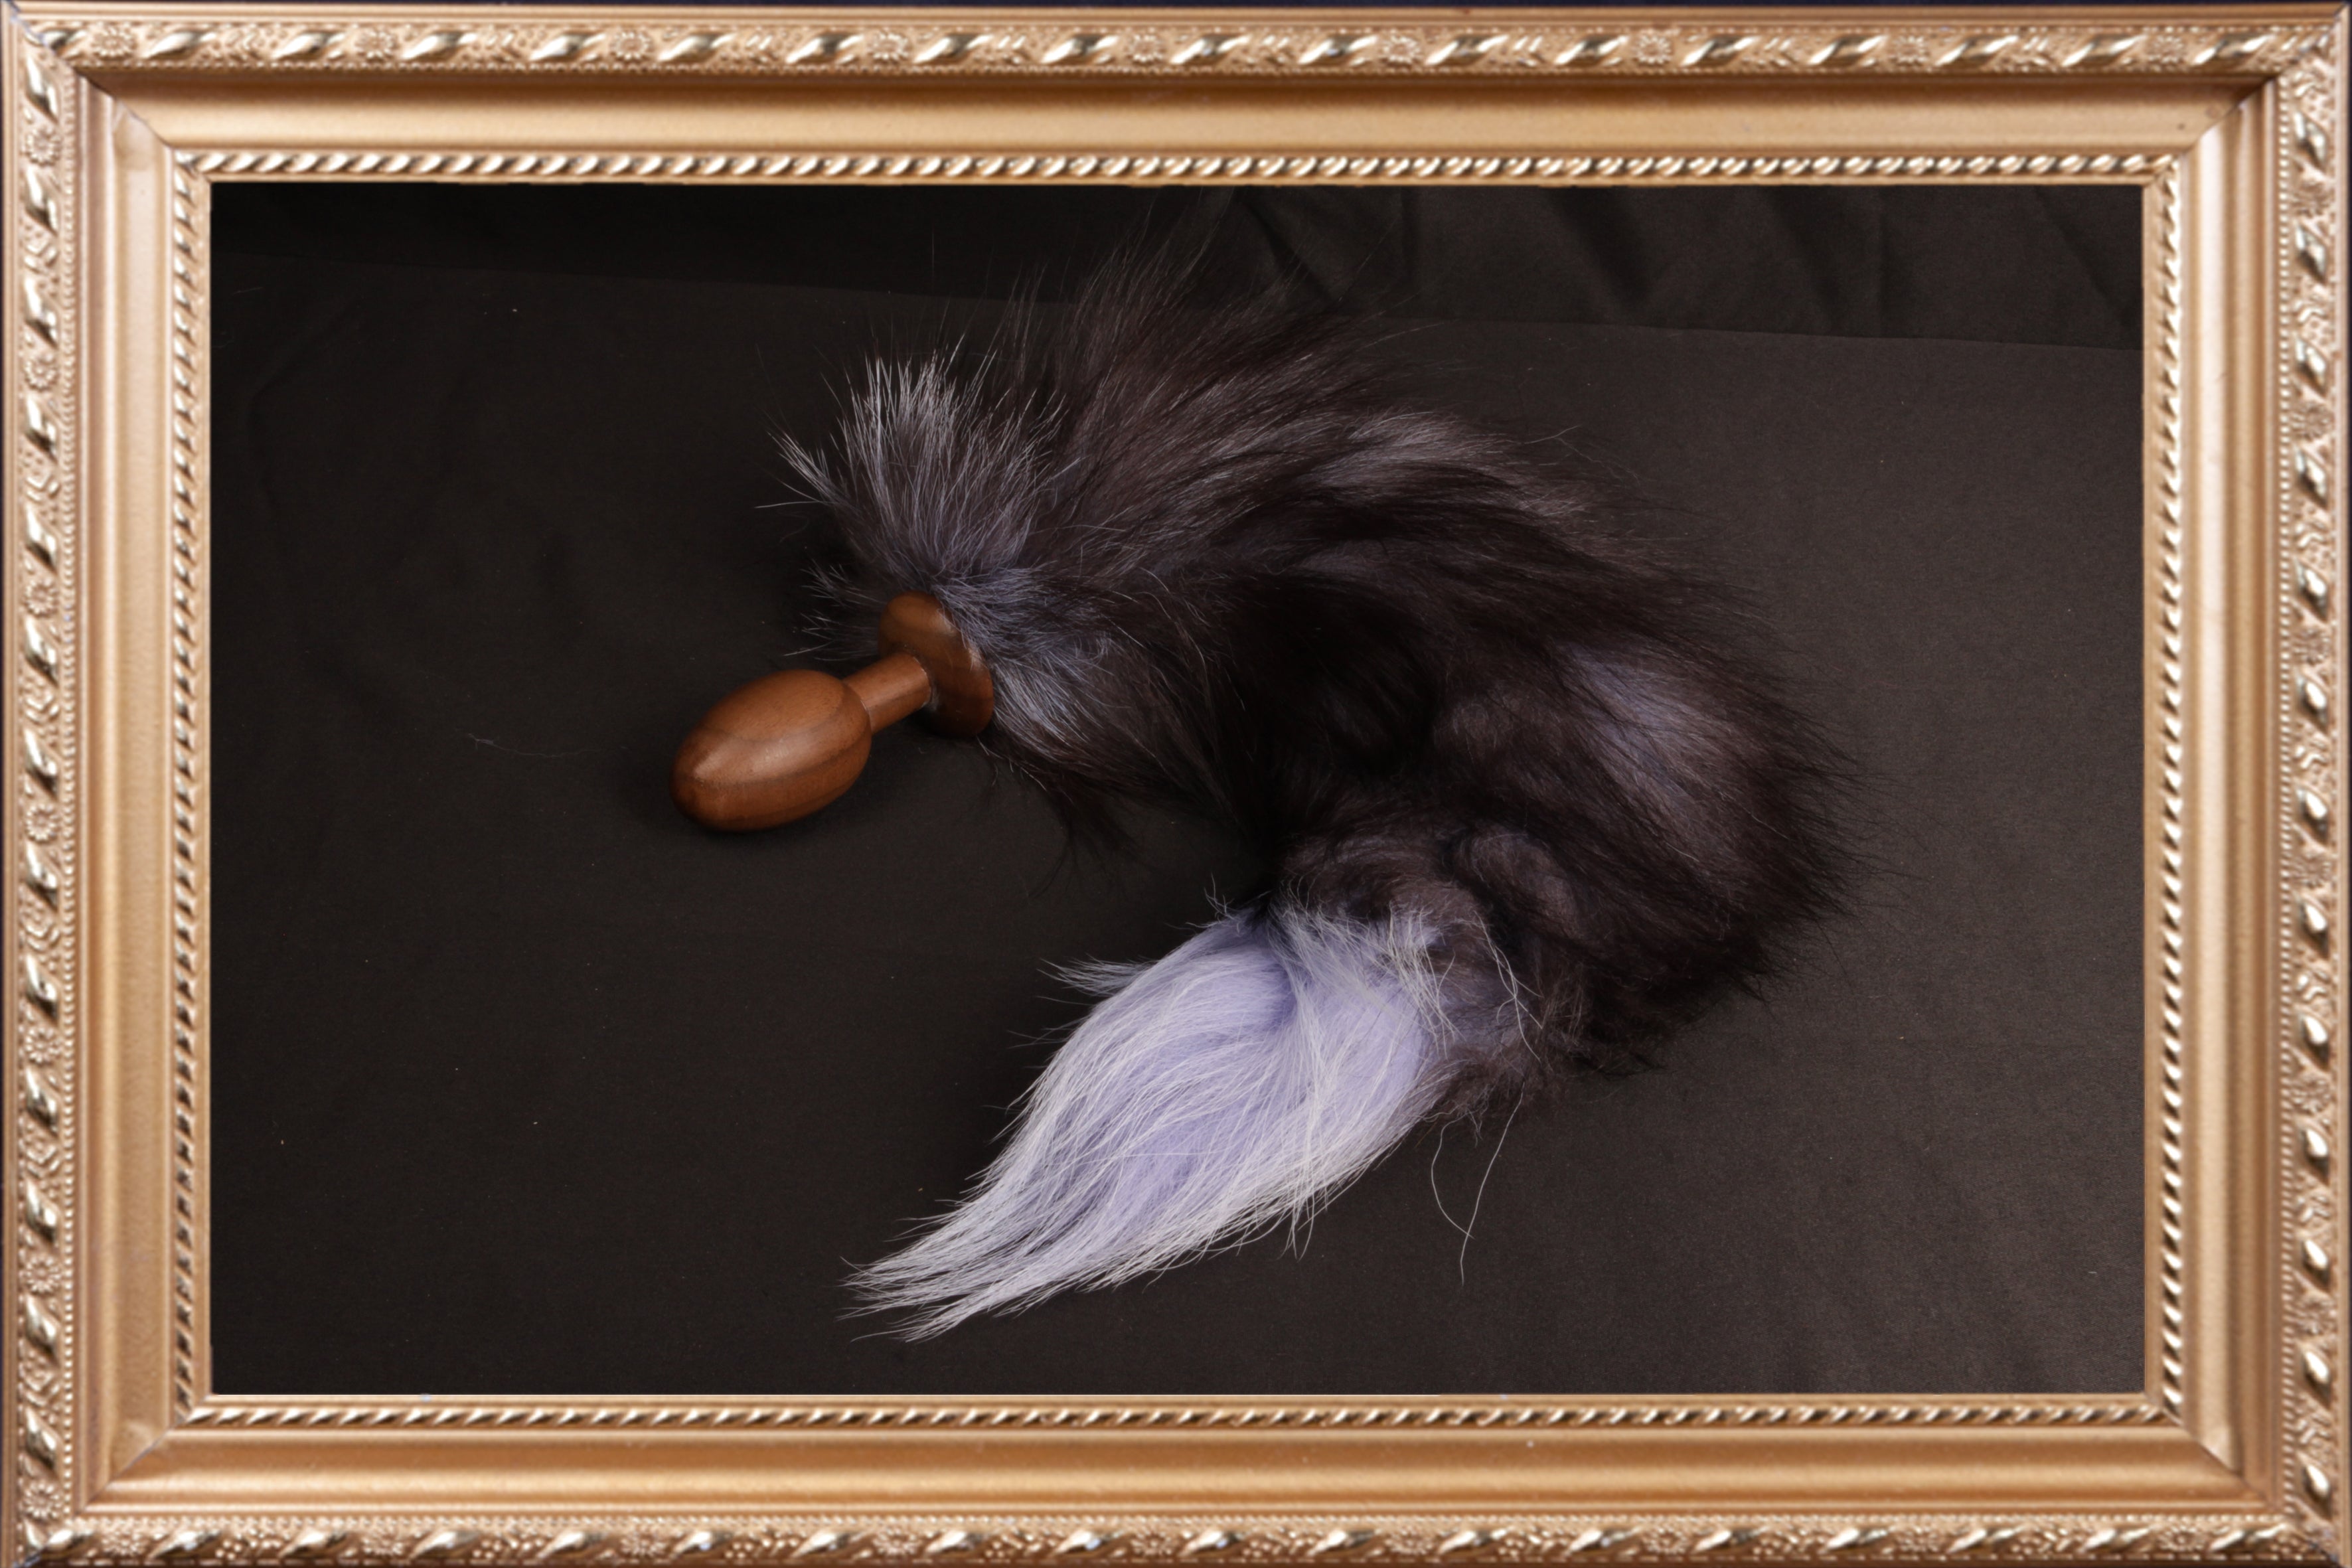 OACHKATZLSCHWOAF Nuss || Wooden Furry Tail Anal Butt Plug Holz|| Fox Bunny Raccoon || Sex Toy || Handmade by Holz-Knecht.at